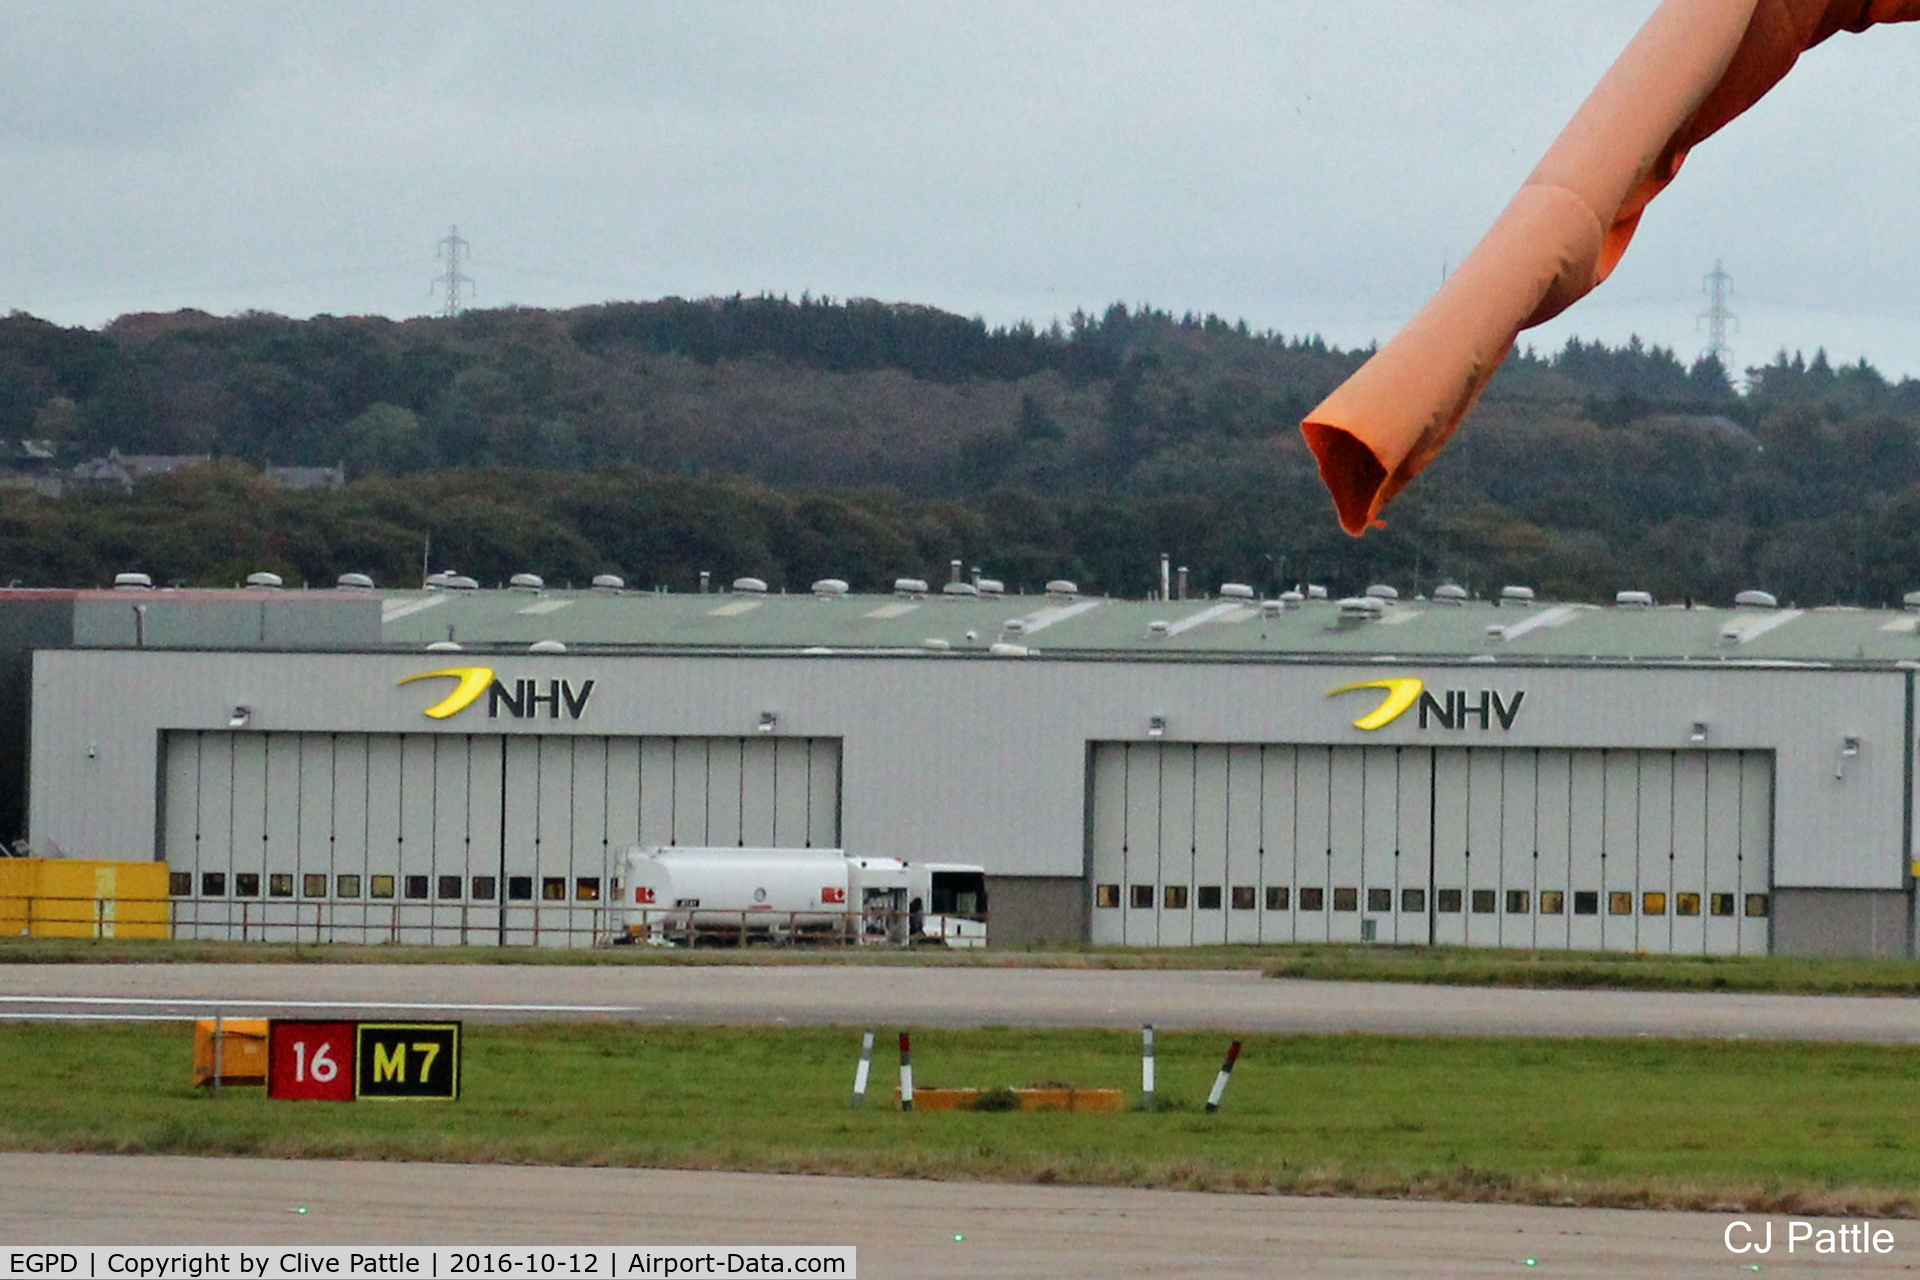 Aberdeen Airport, Aberdeen, Scotland United Kingdom (EGPD) - The NHV Helicopters hangar at ABZ